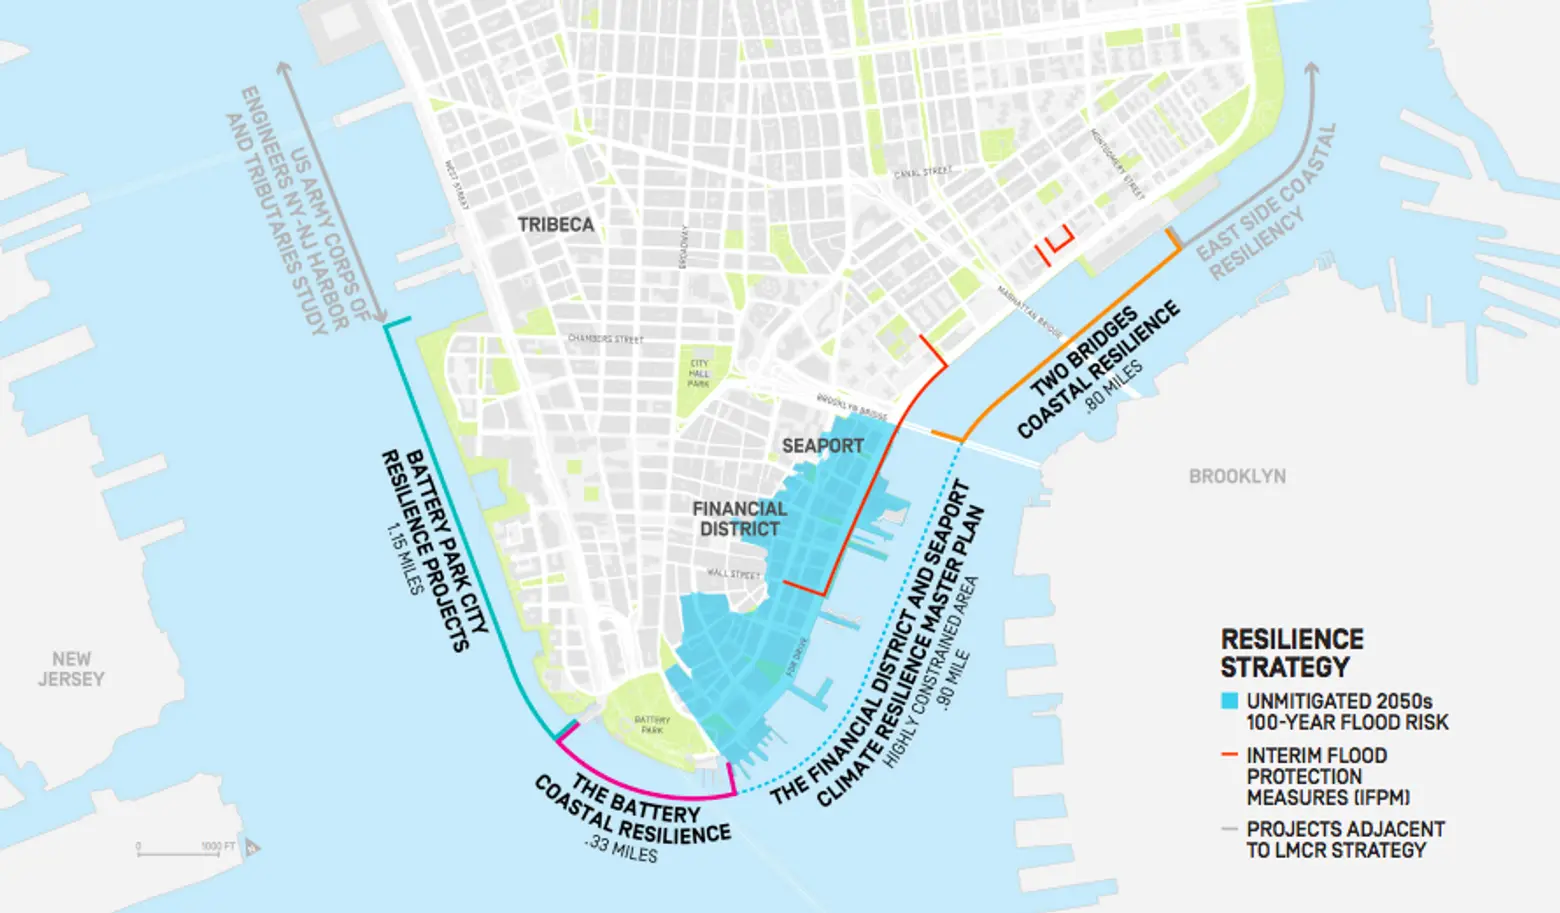 De Blasio unveils $10B plan to flood-proof Lower Manhattan by extending shoreline into the East River